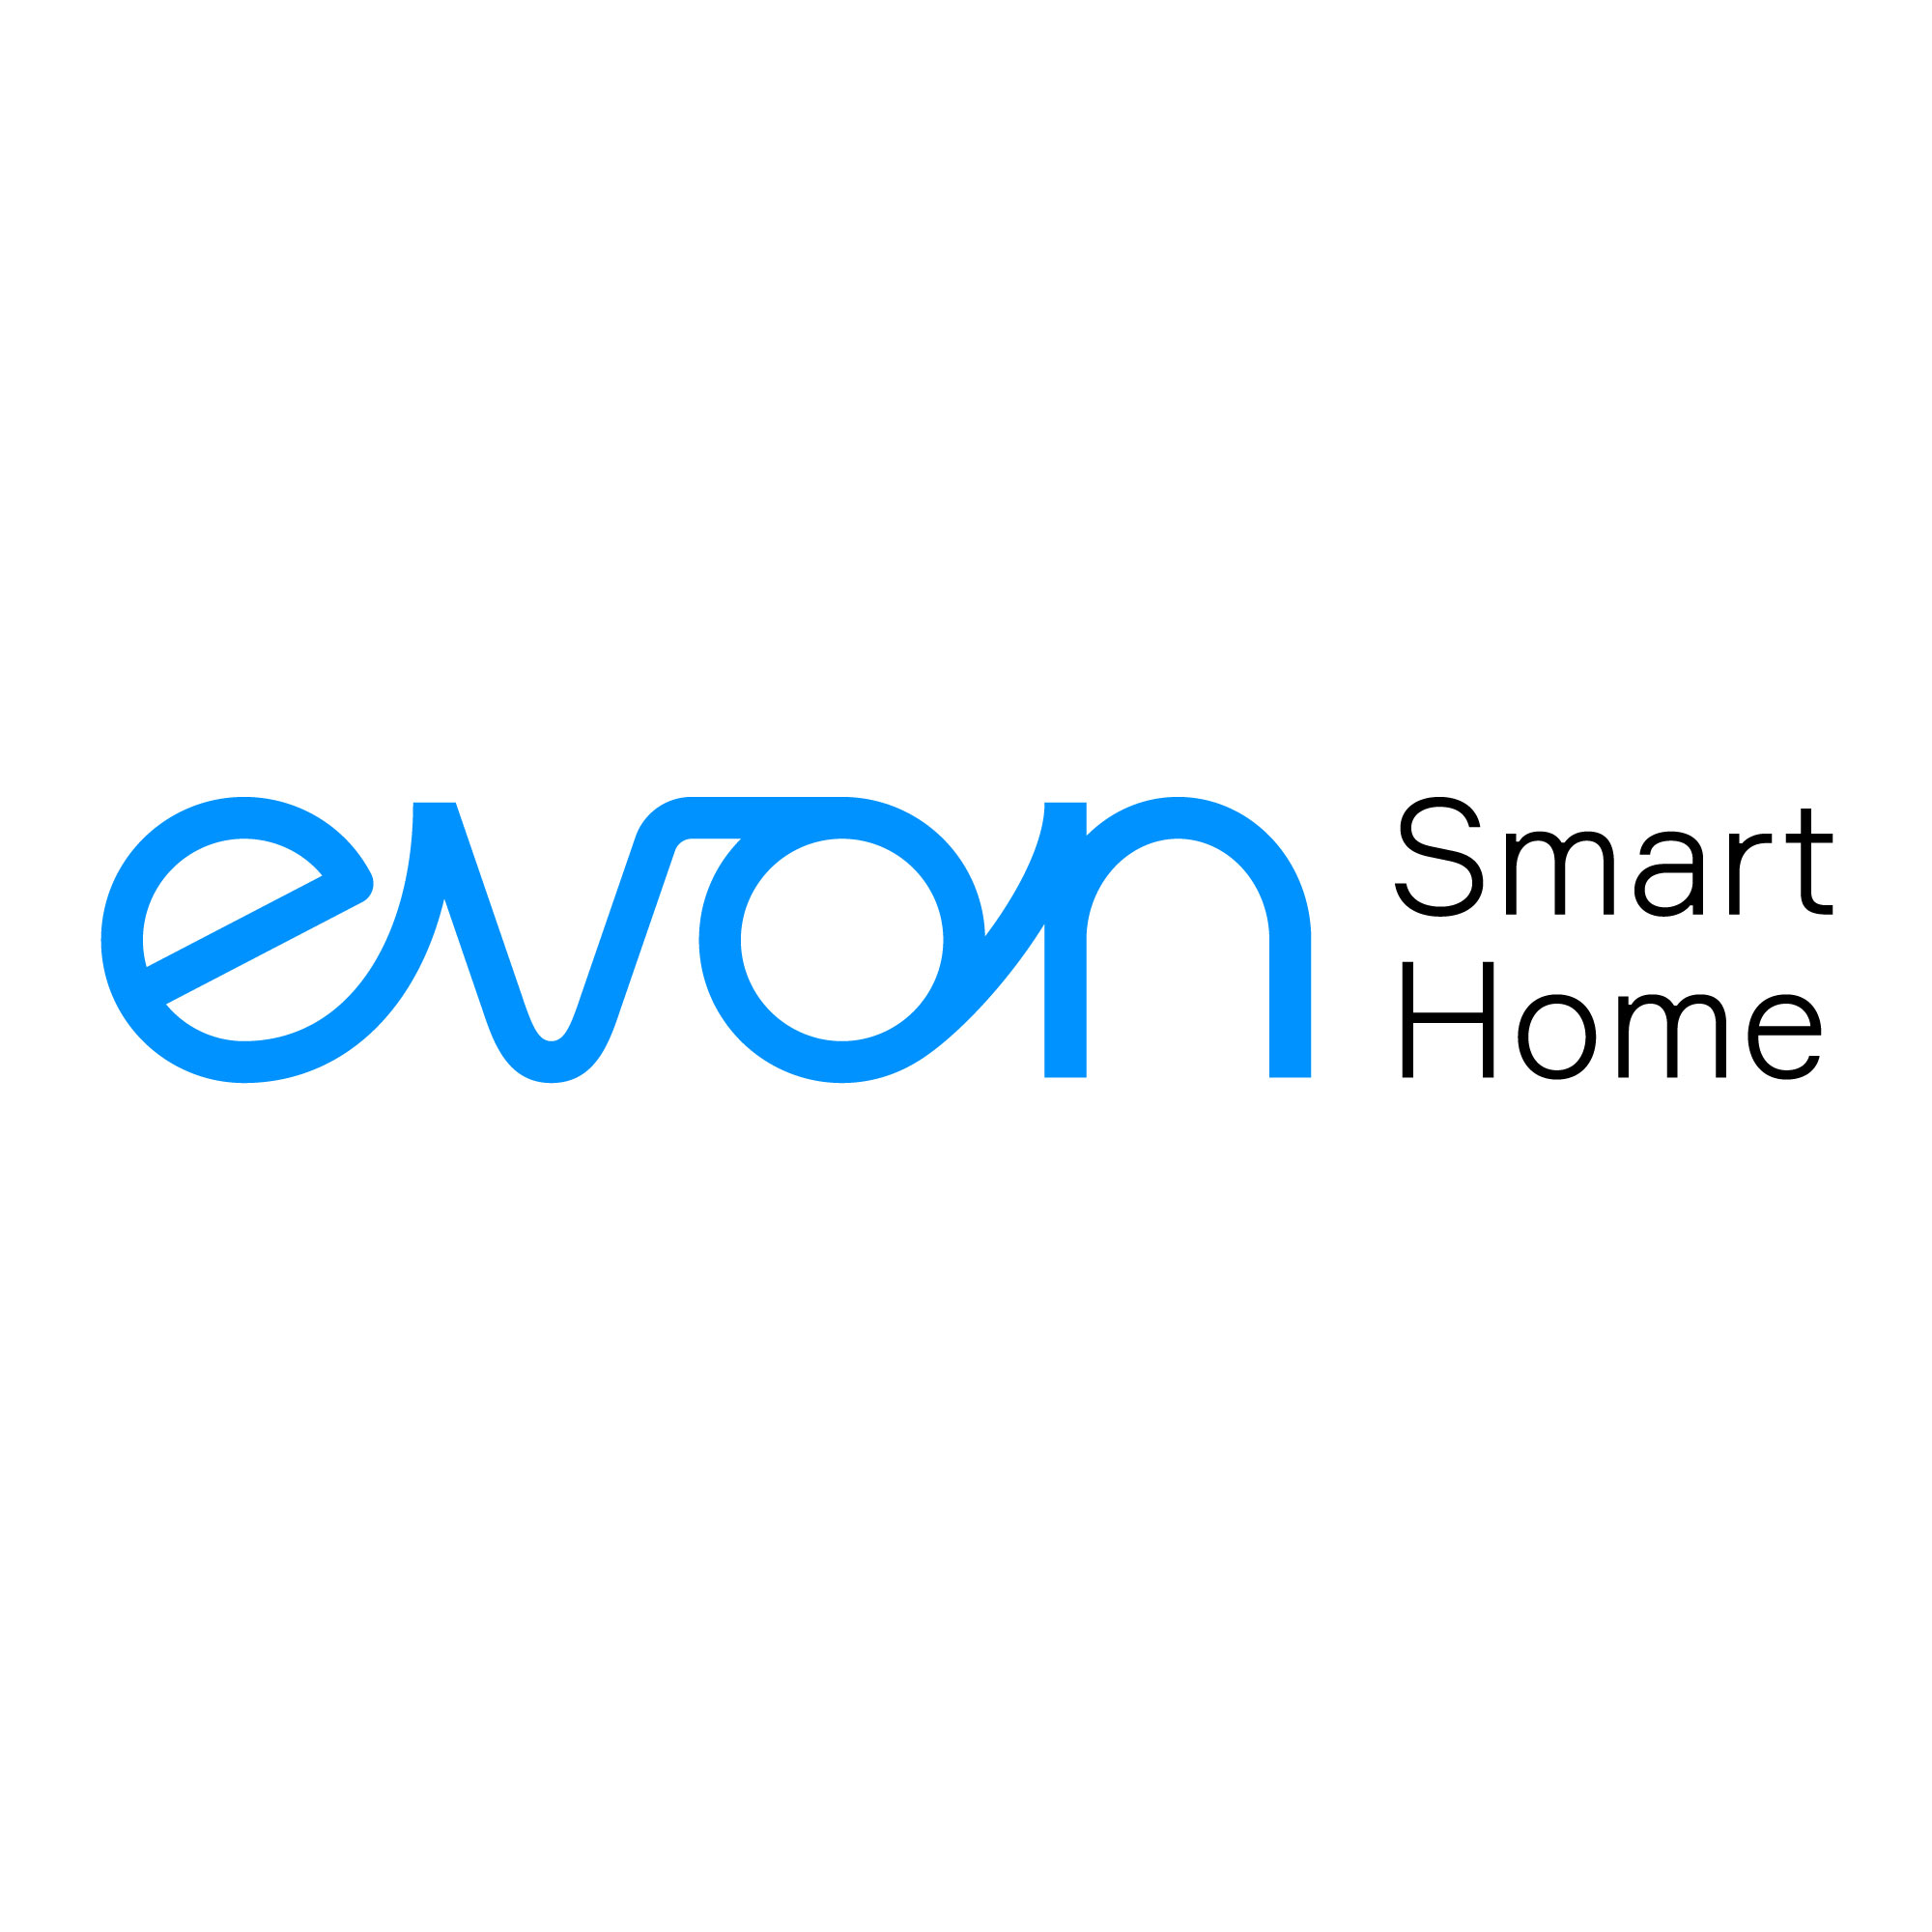 evon Smart Home Logo